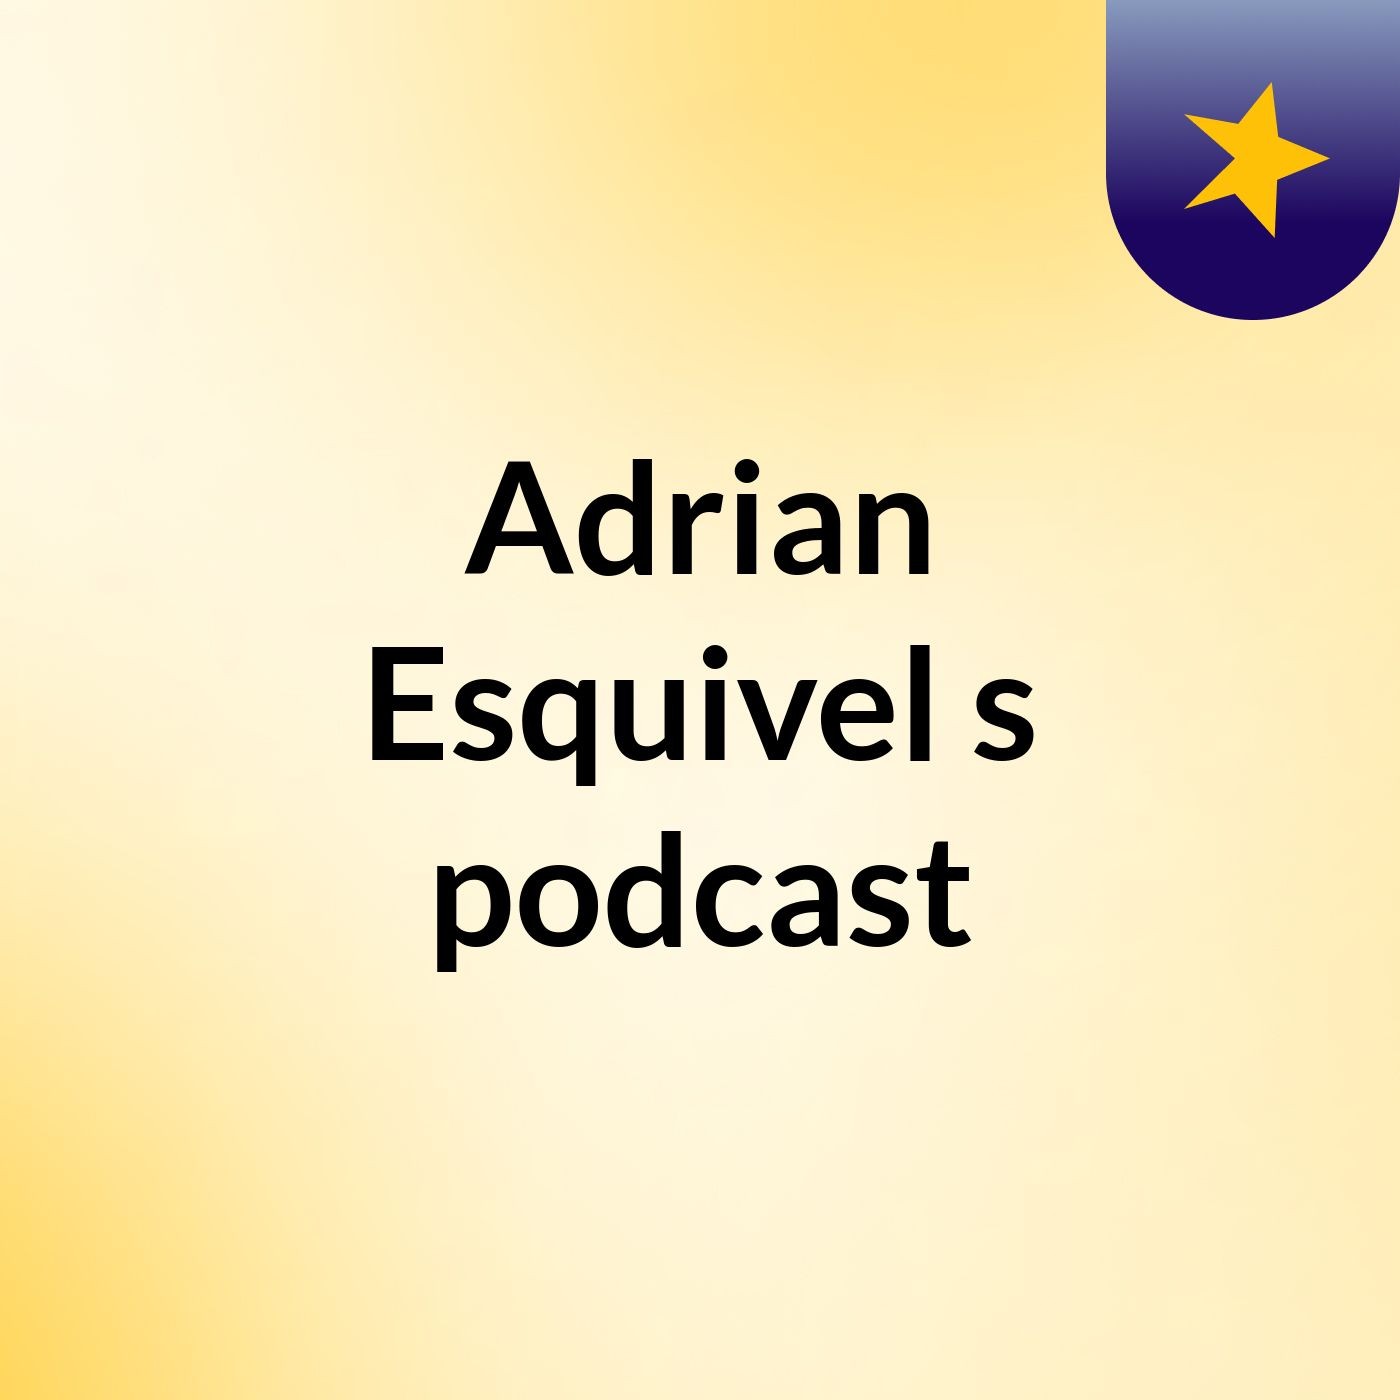 Adrian Esquivel's podcast